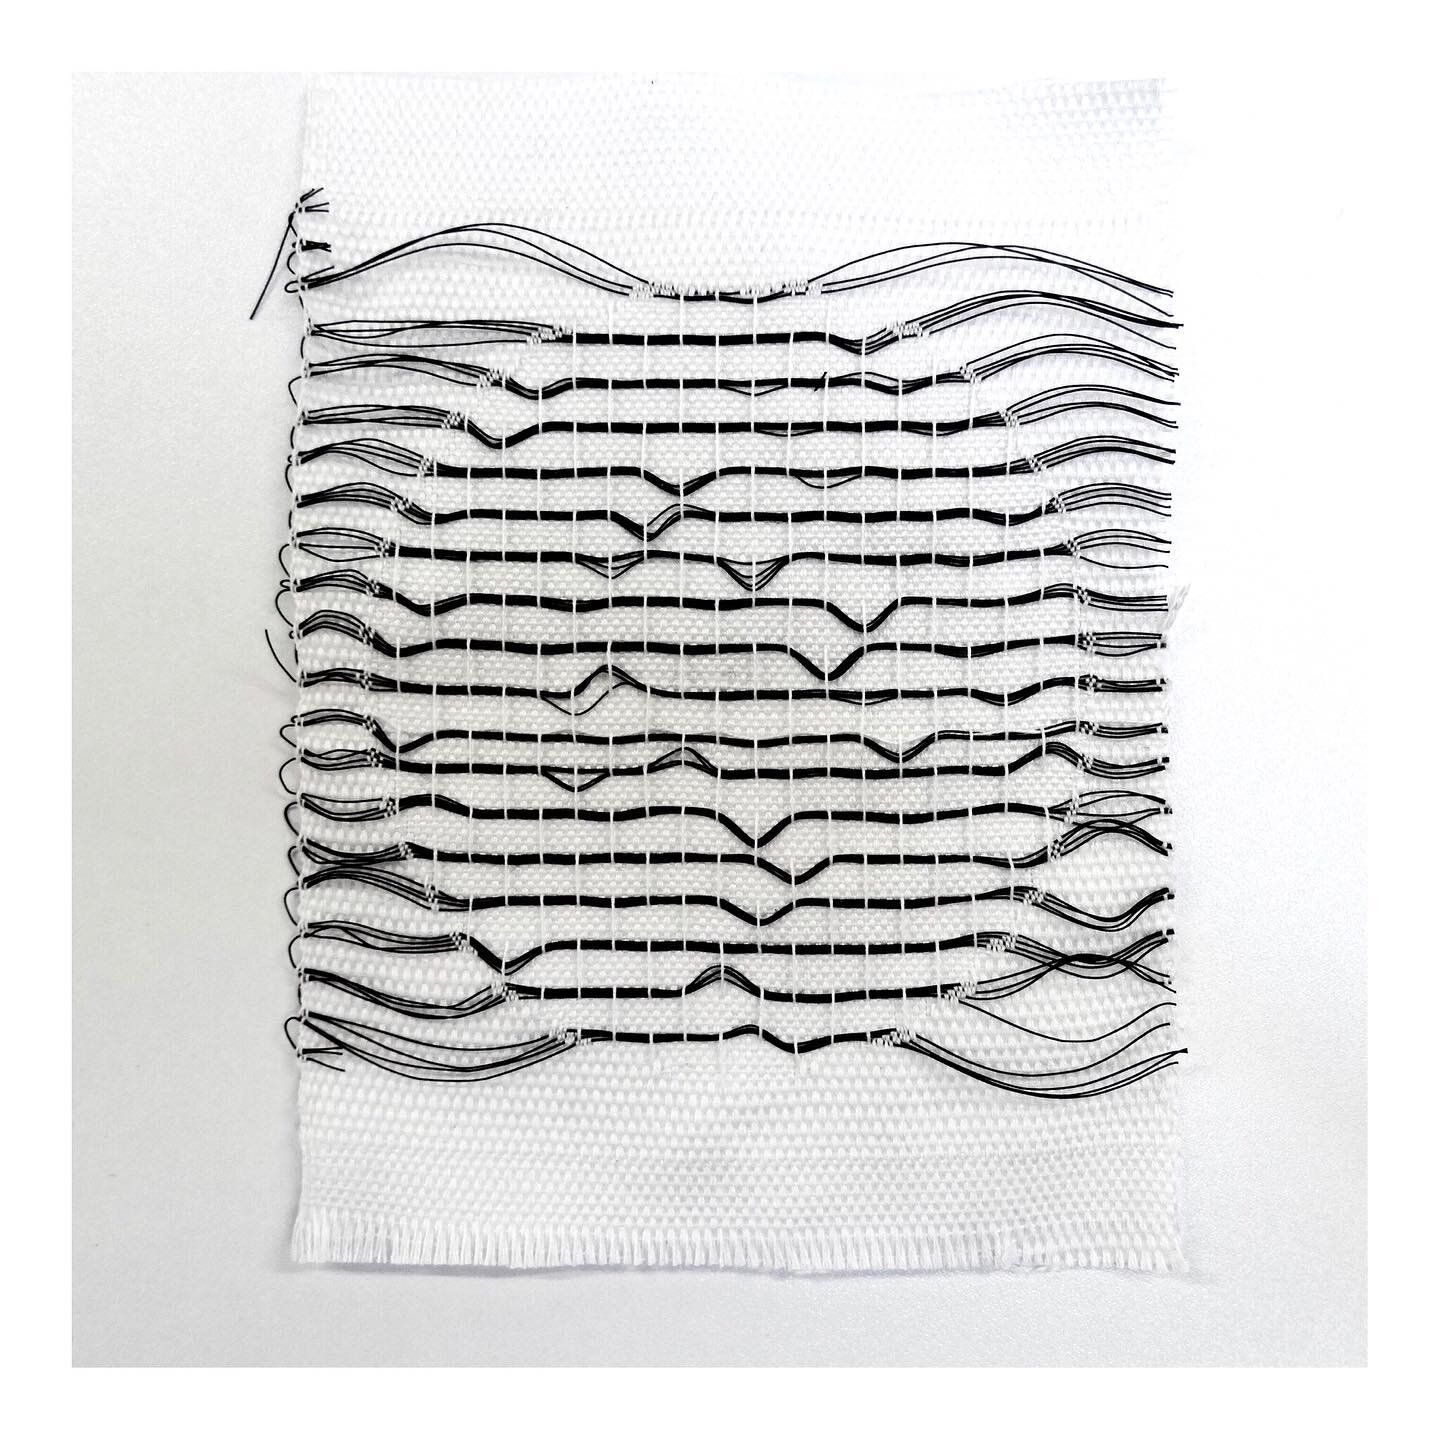 Voilage
.
.
Tissage jacquard r&eacute;alis&eacute; sur le m&eacute;tier &agrave; tisser #tc2 du @texlabliege 
.
.
.
#sample #textile #sheer #curtain #sampling #textiledesign #jacquard #weaving #ontheloom #process #design #fabric #transparency #yarn #